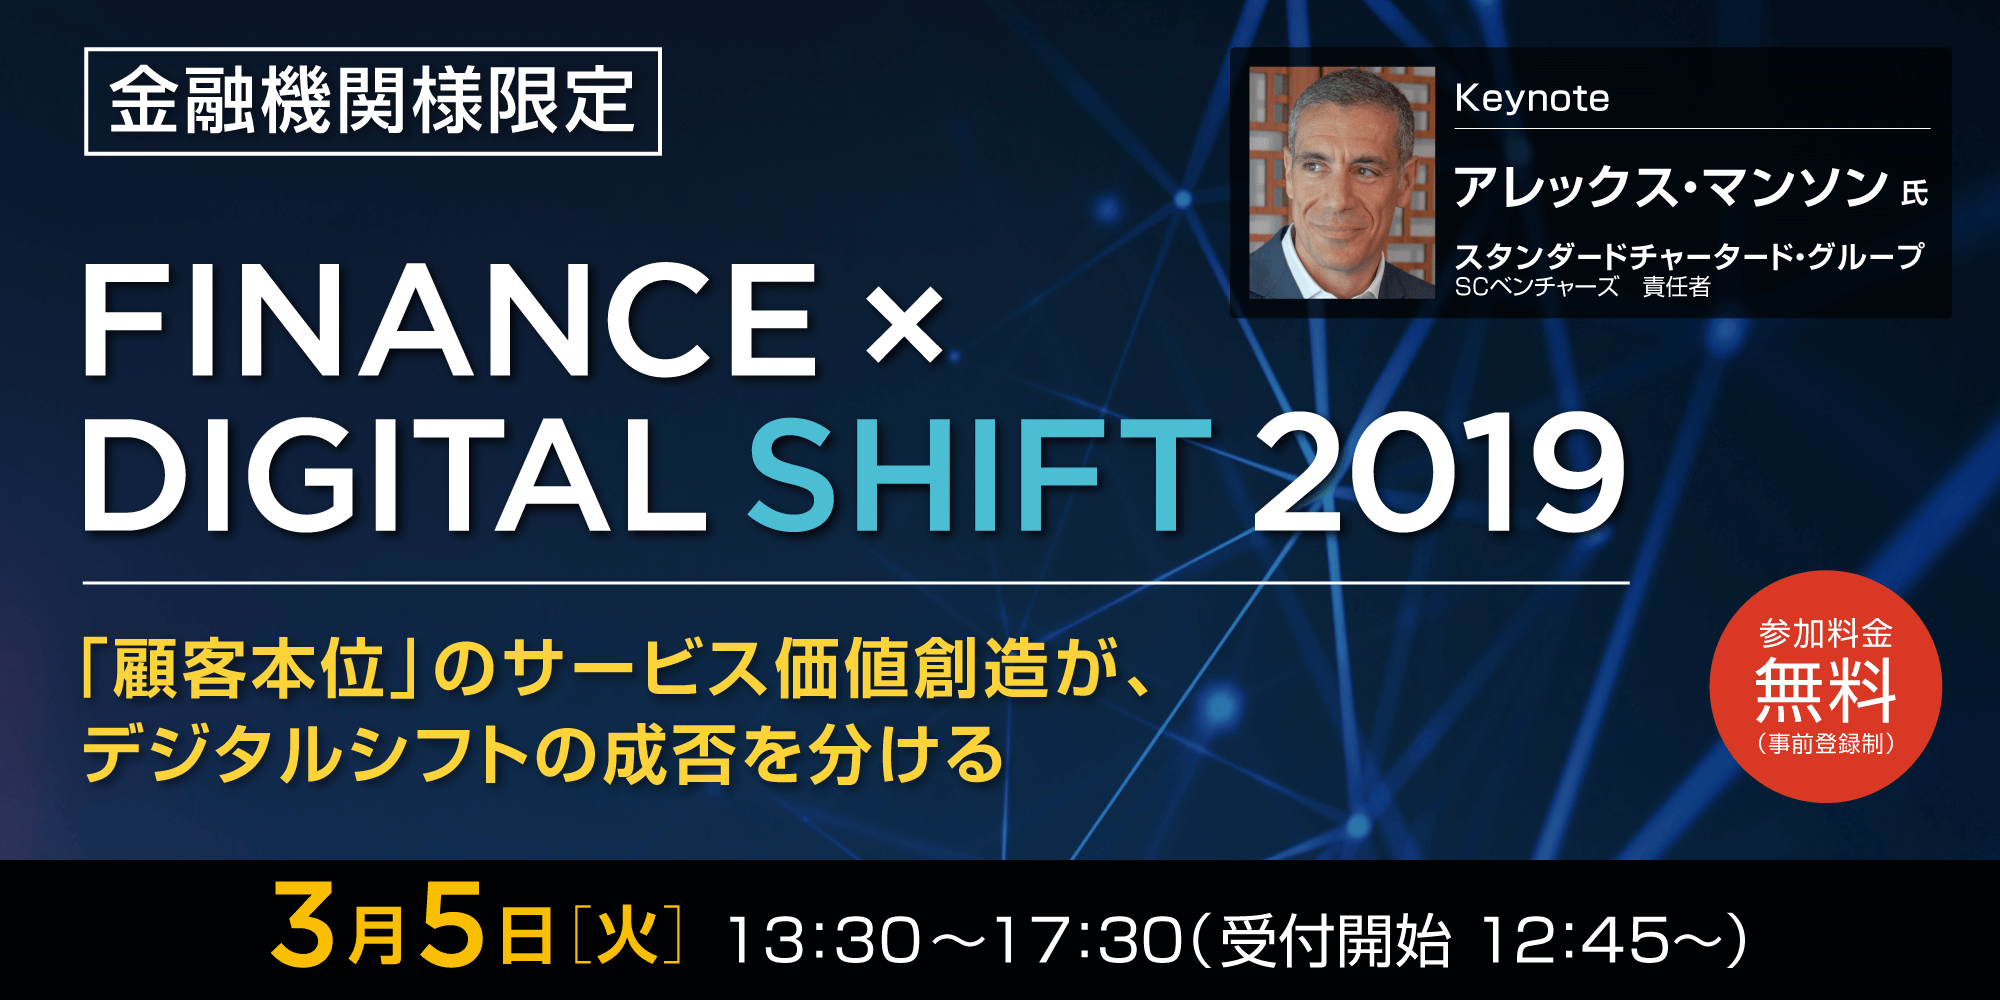 Finance × Digital SHIFT 2019